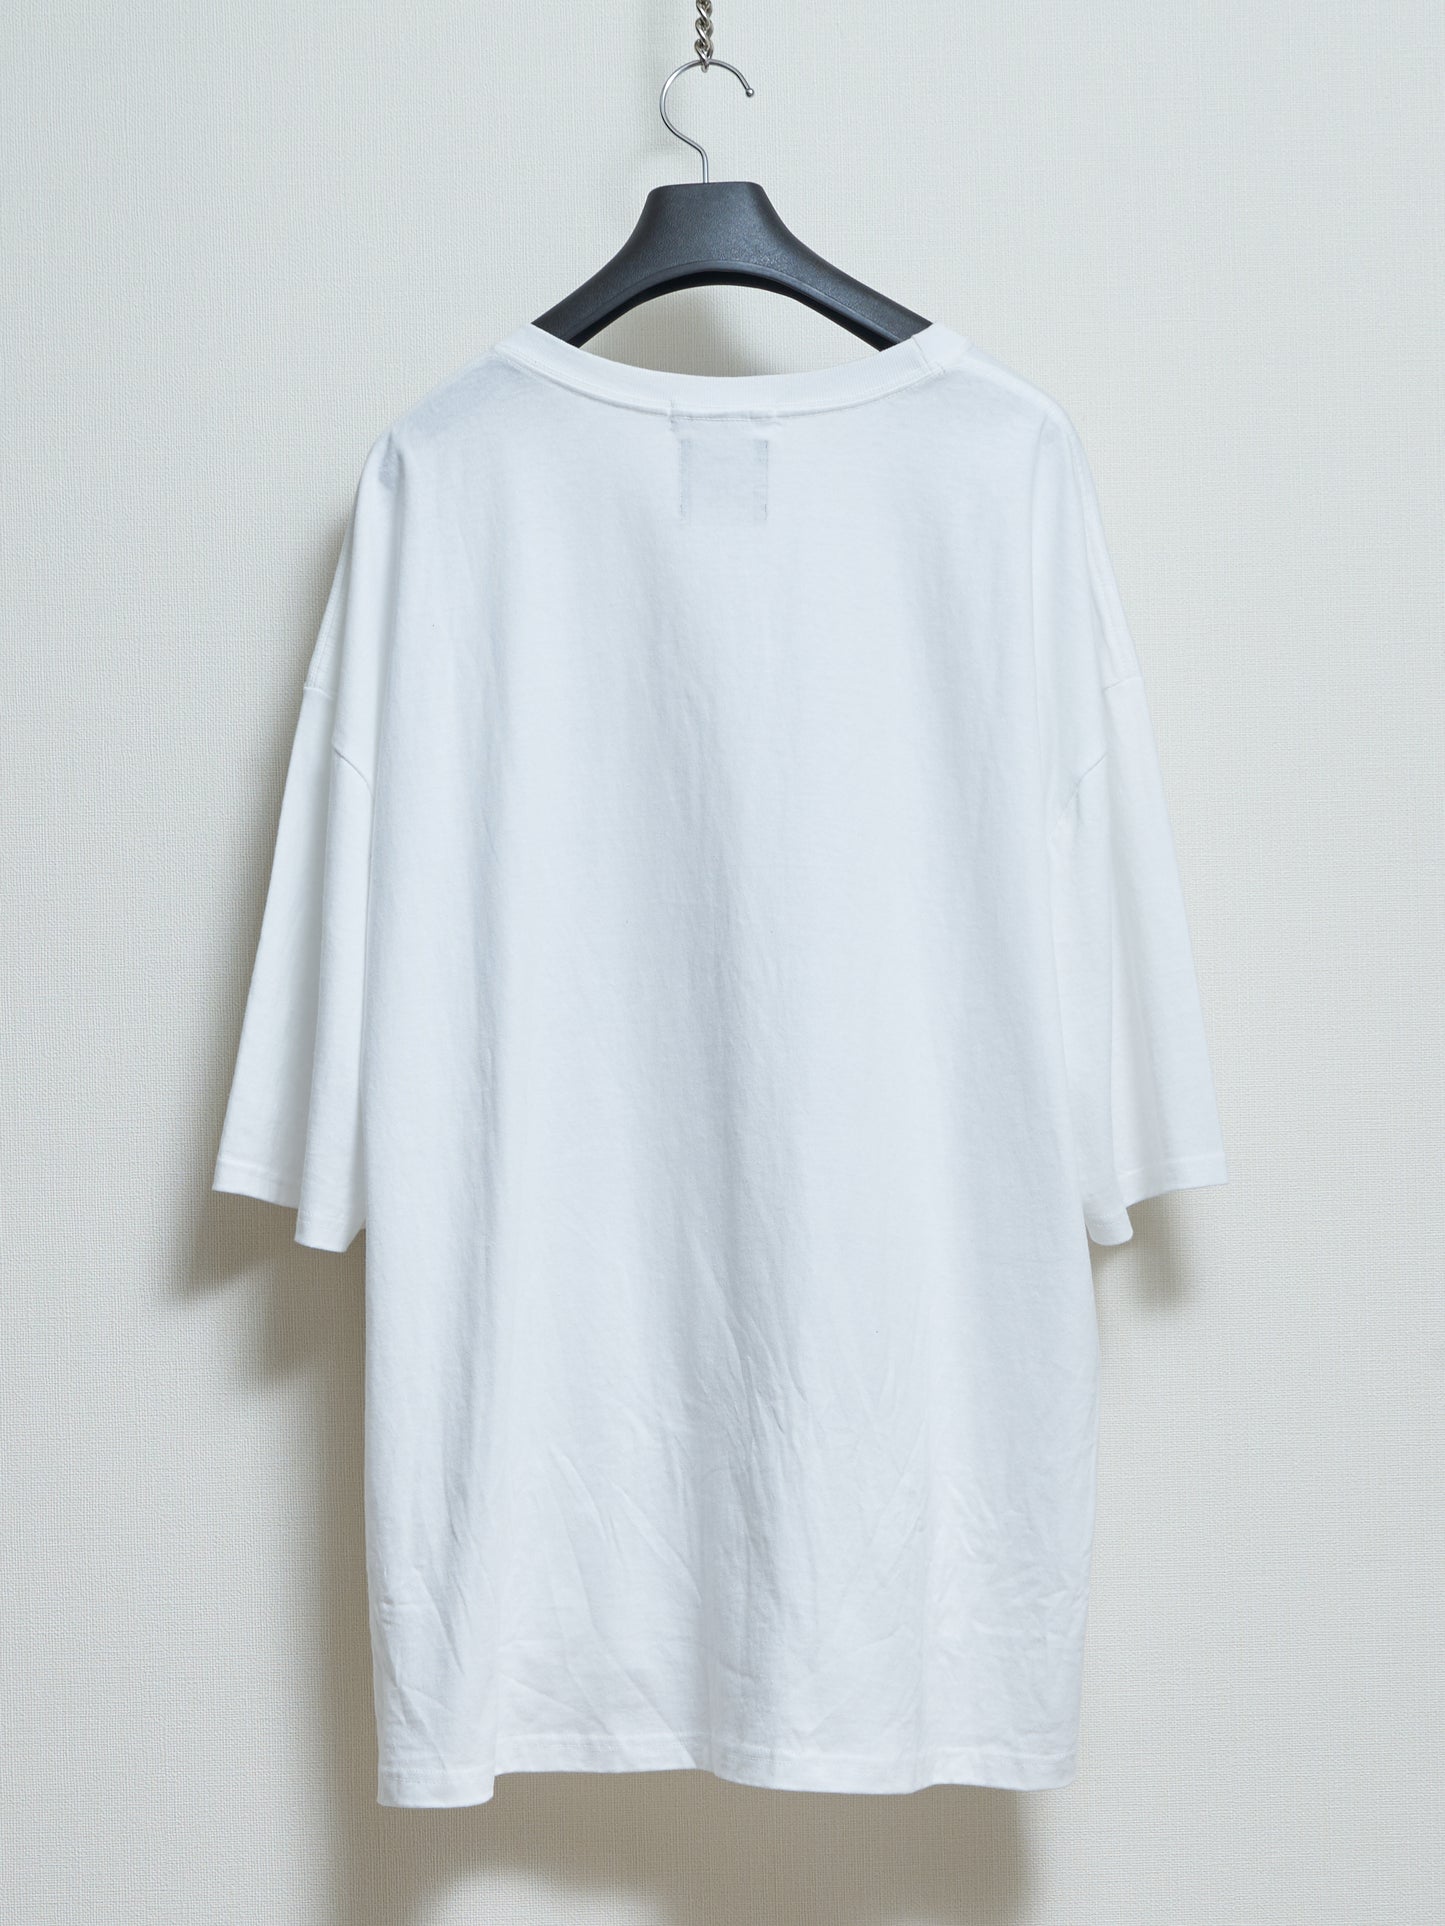 【ORDERD PRODUCT】Tartan Pocket T-Shirts / BLACK-GW [Earth Tag]